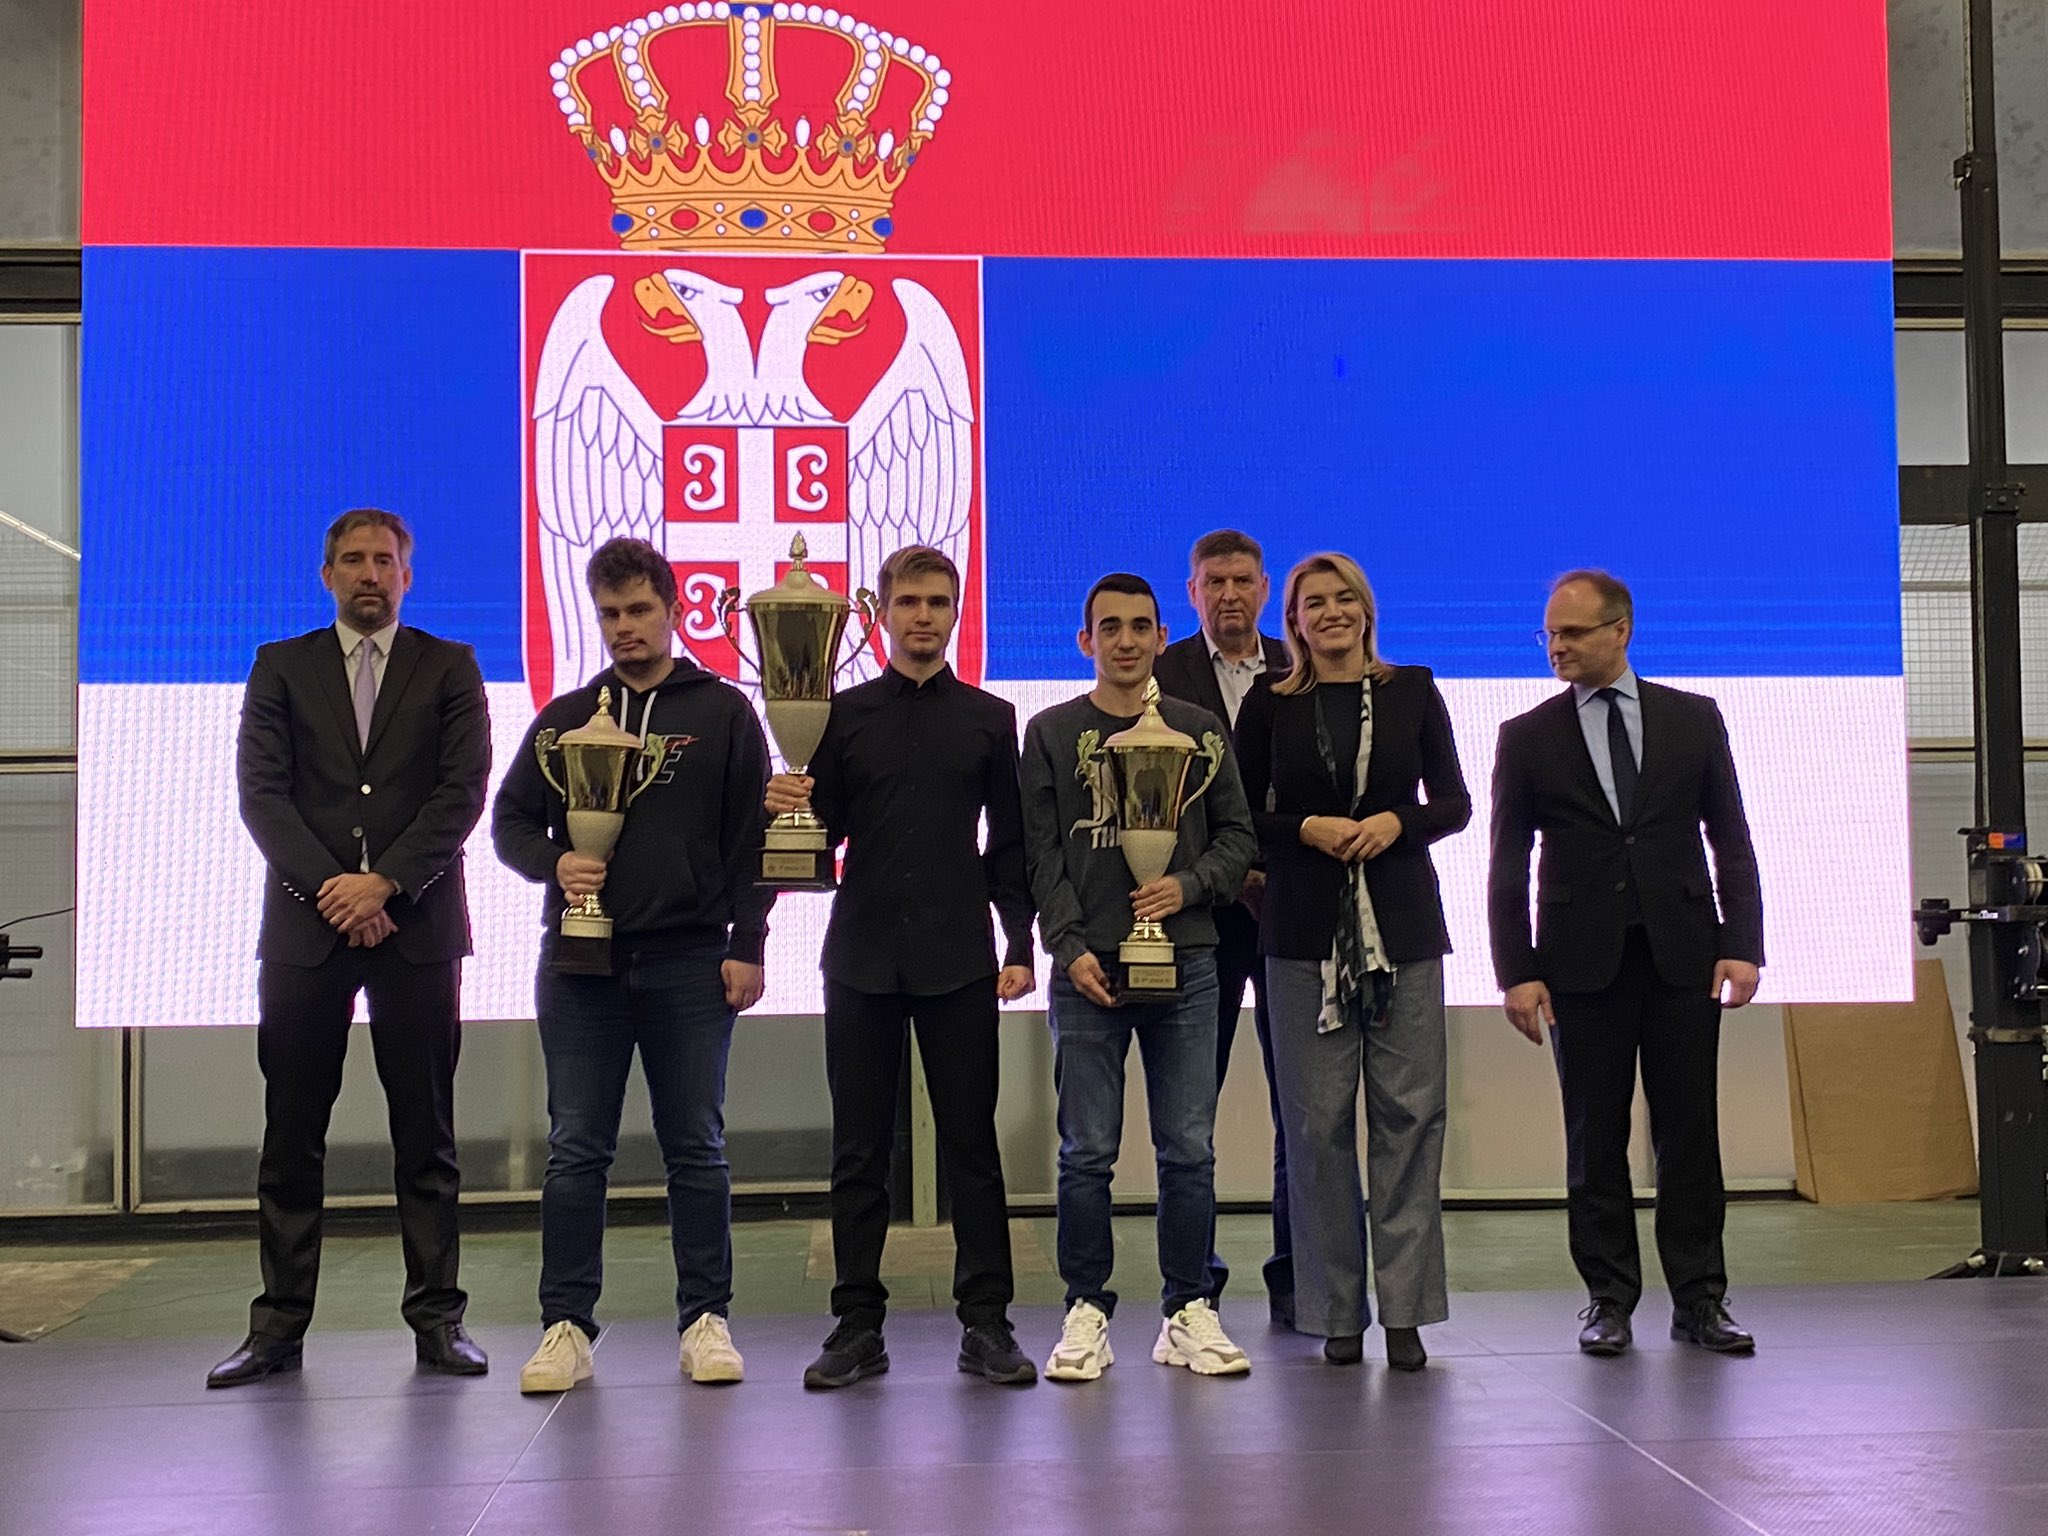 European Chess Union on X: European Rapid Chess Championship 2023  concluded in #Zagreb, #Croatia! Congratulations to the Winners: 🏆GM Alexey  Sarana 🇷🇸, 9.5 points 🥈GM Haik Martirosyan 🇦🇲, 9 points 🥉GM  Bogdan-Daniel